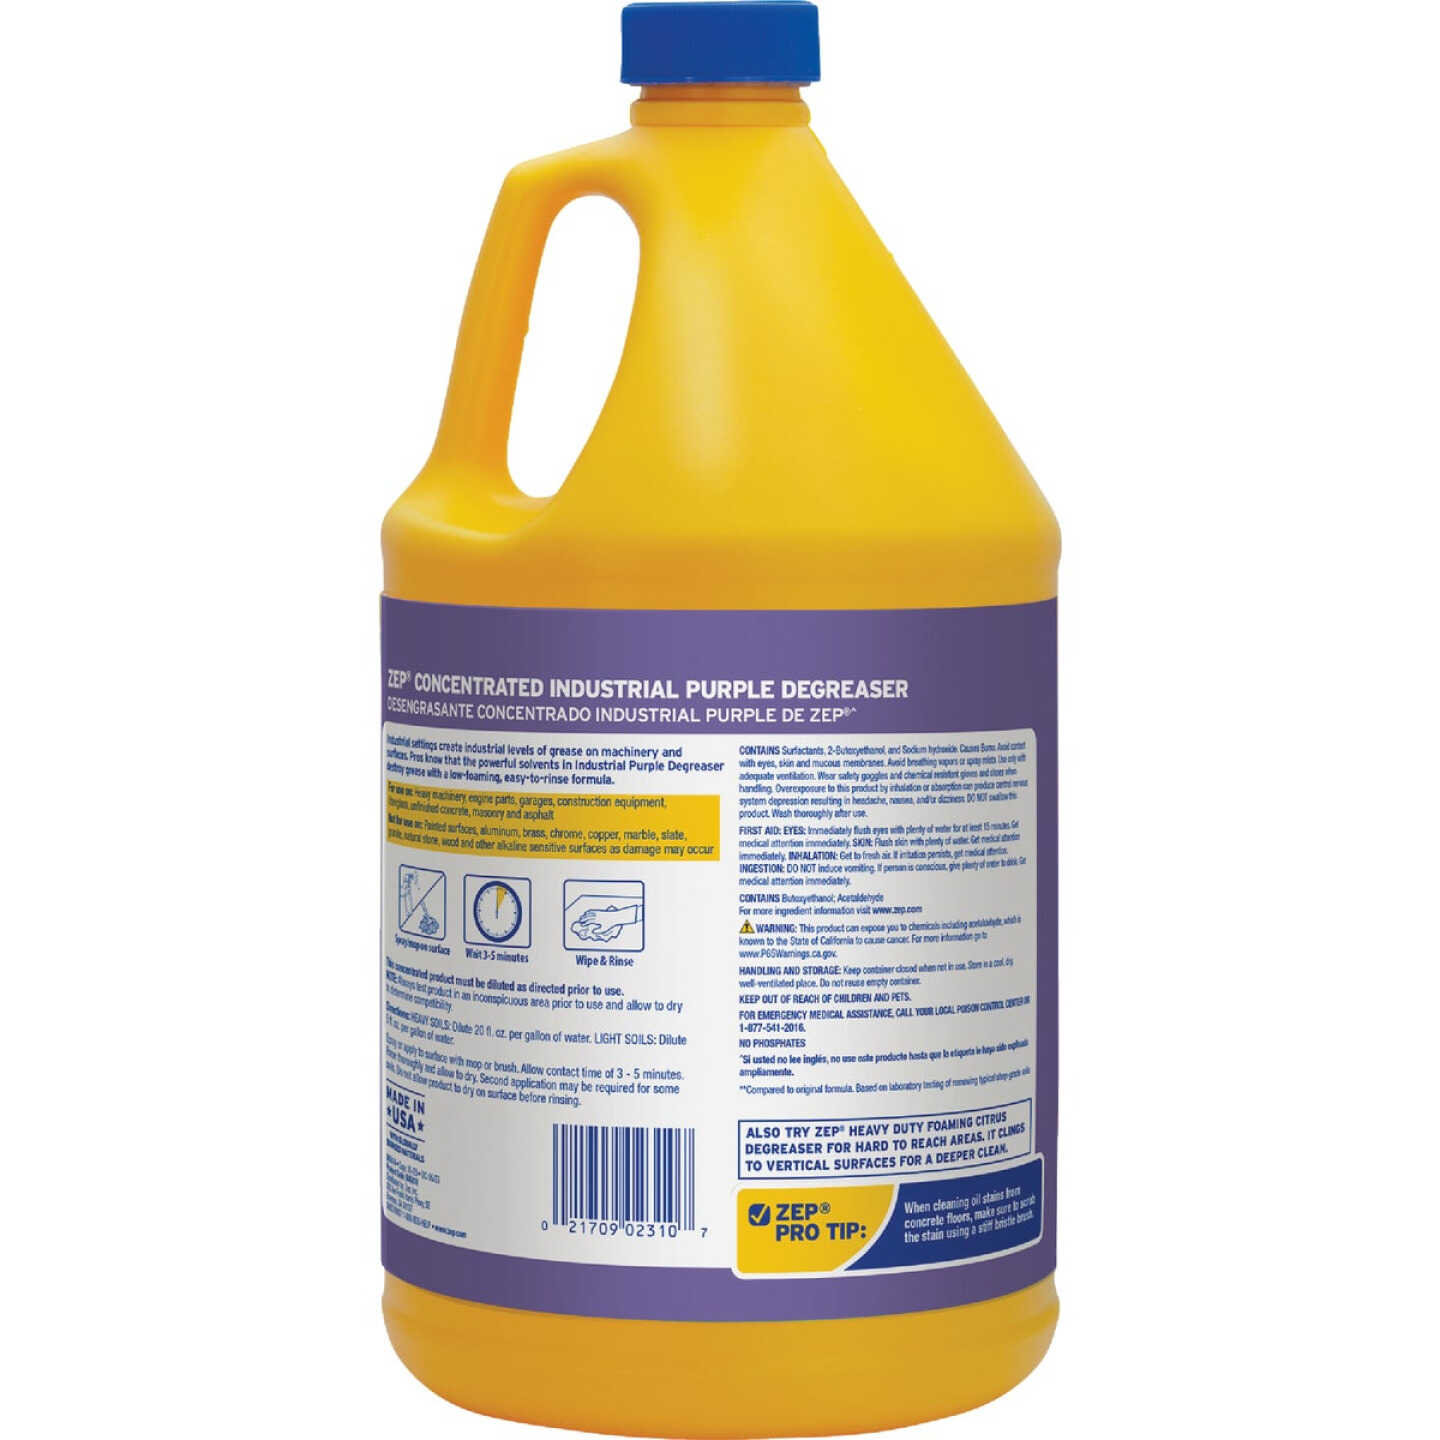 ZEP, Citrus-Based Solvent, Bottle, Degreaser - 449W13